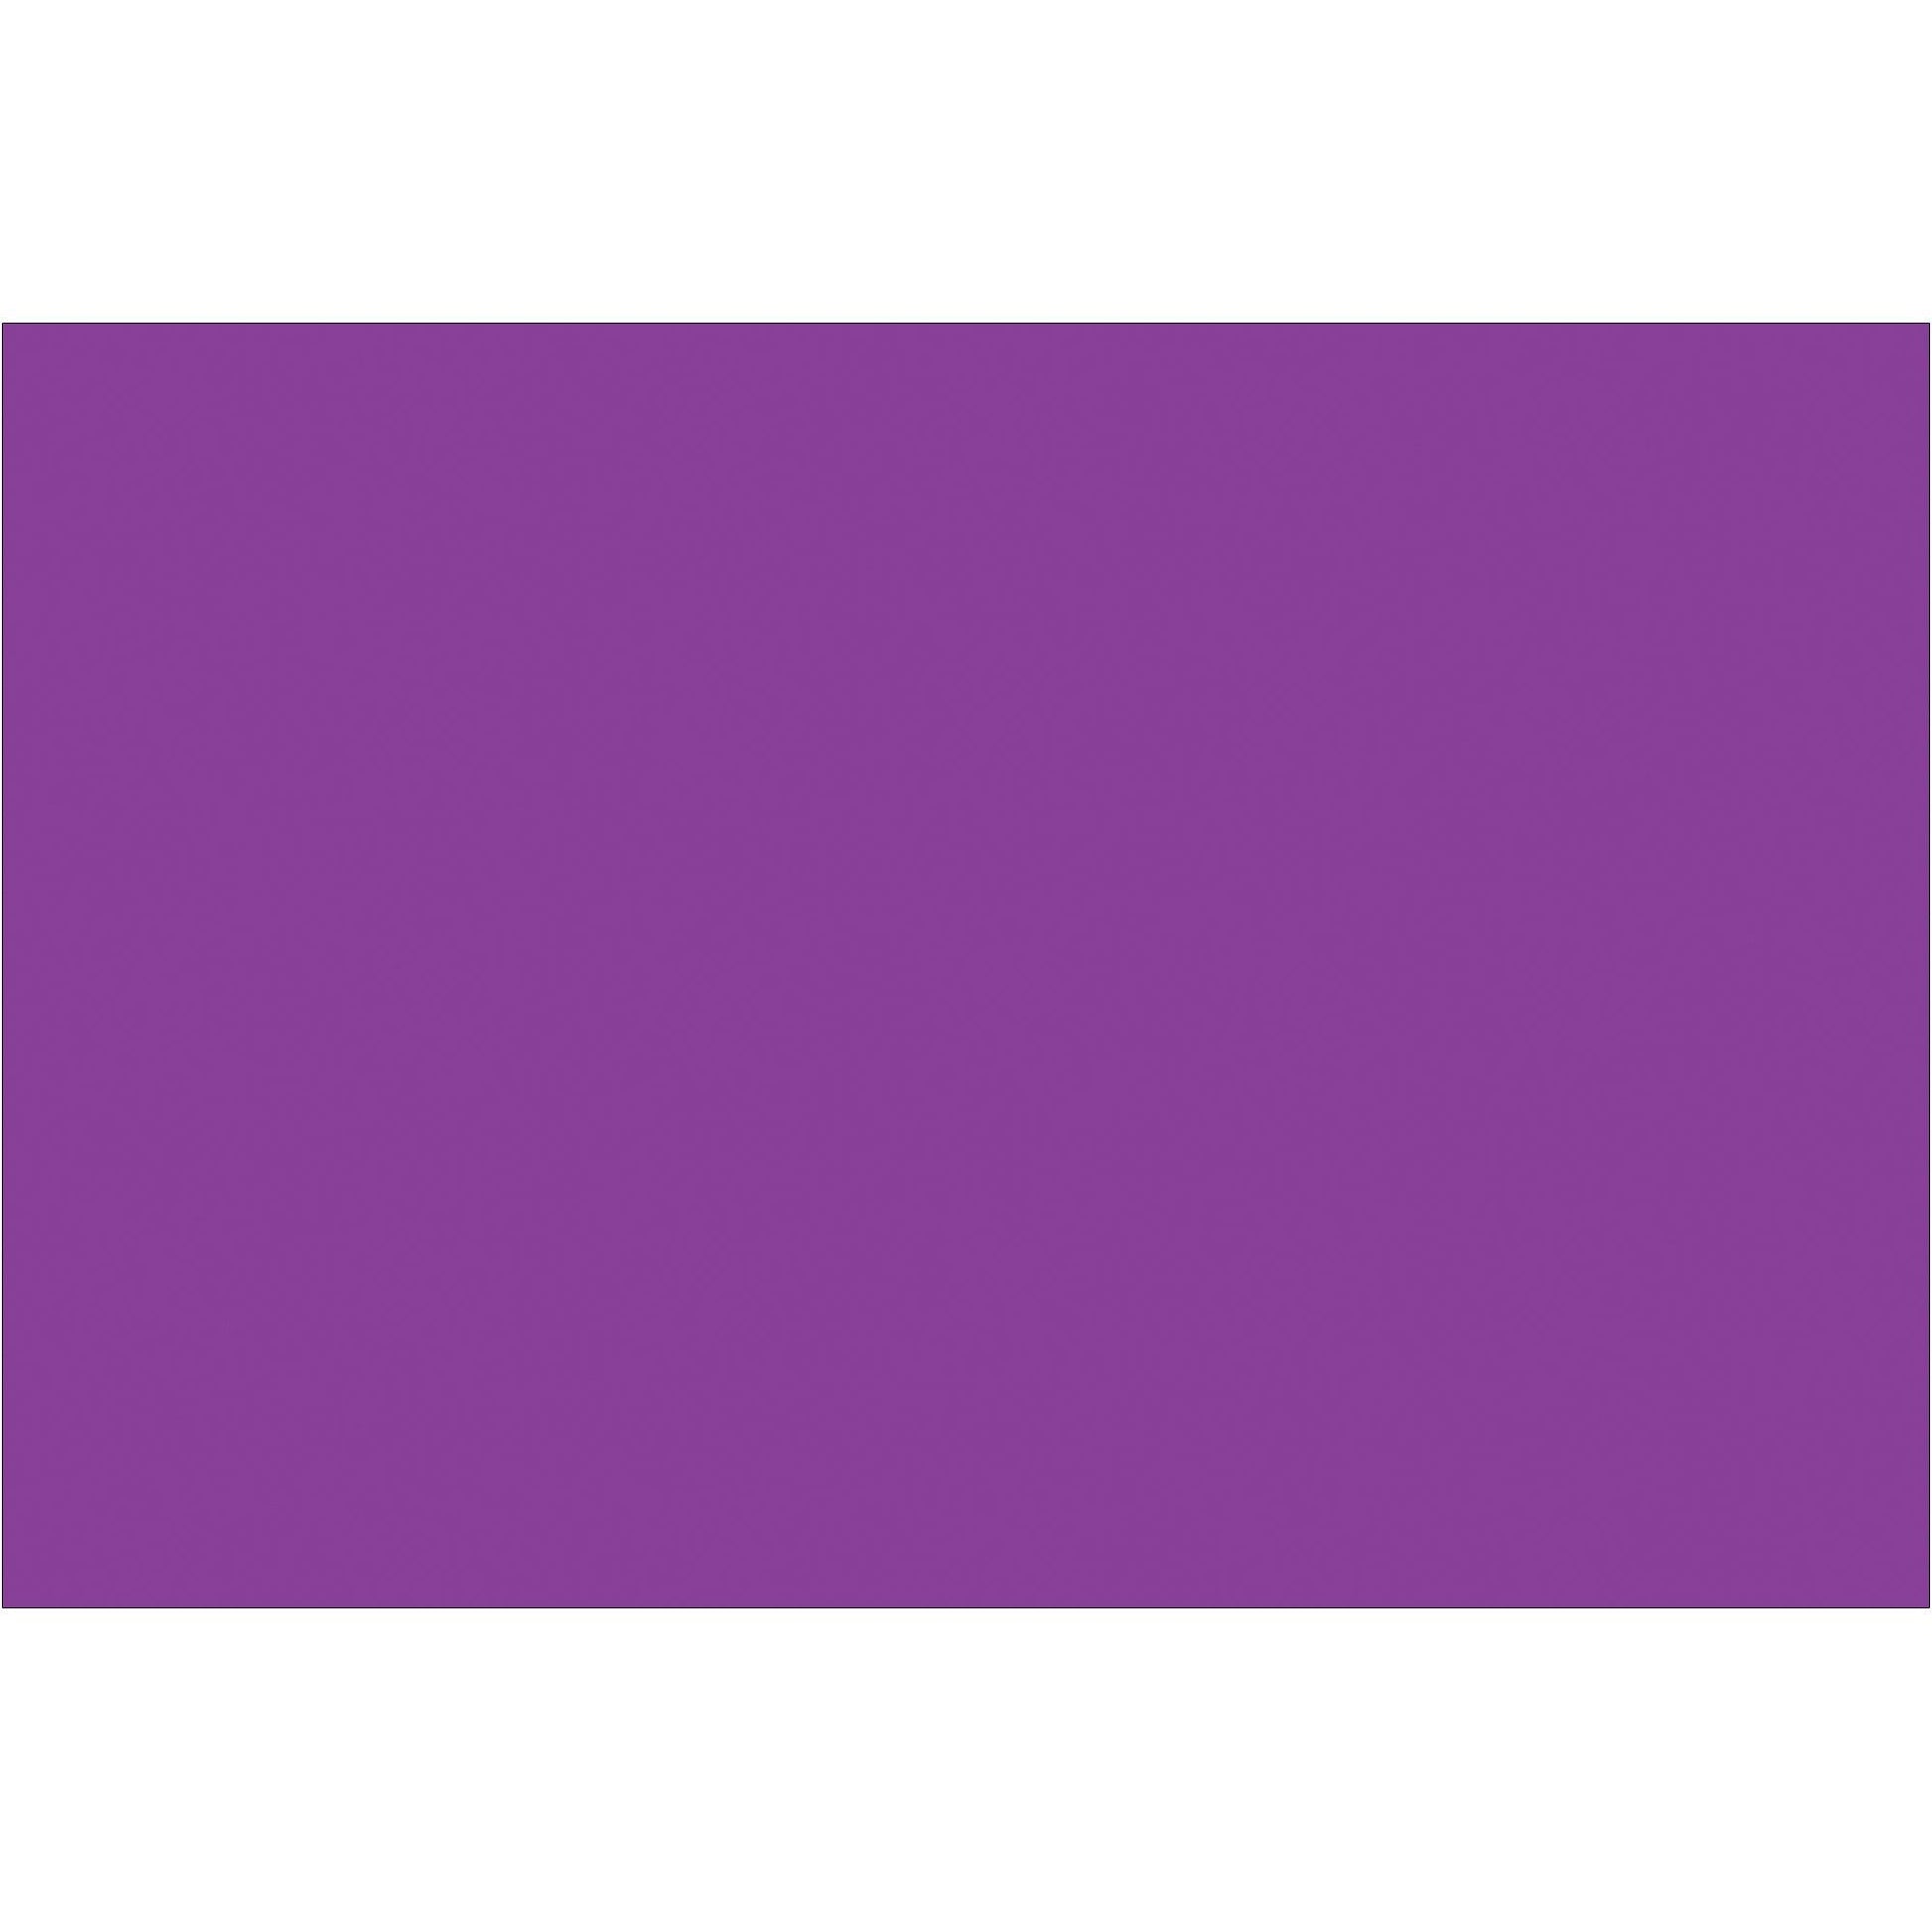 4 x 6" Purple Inventory Rectangle Labels - DL635M